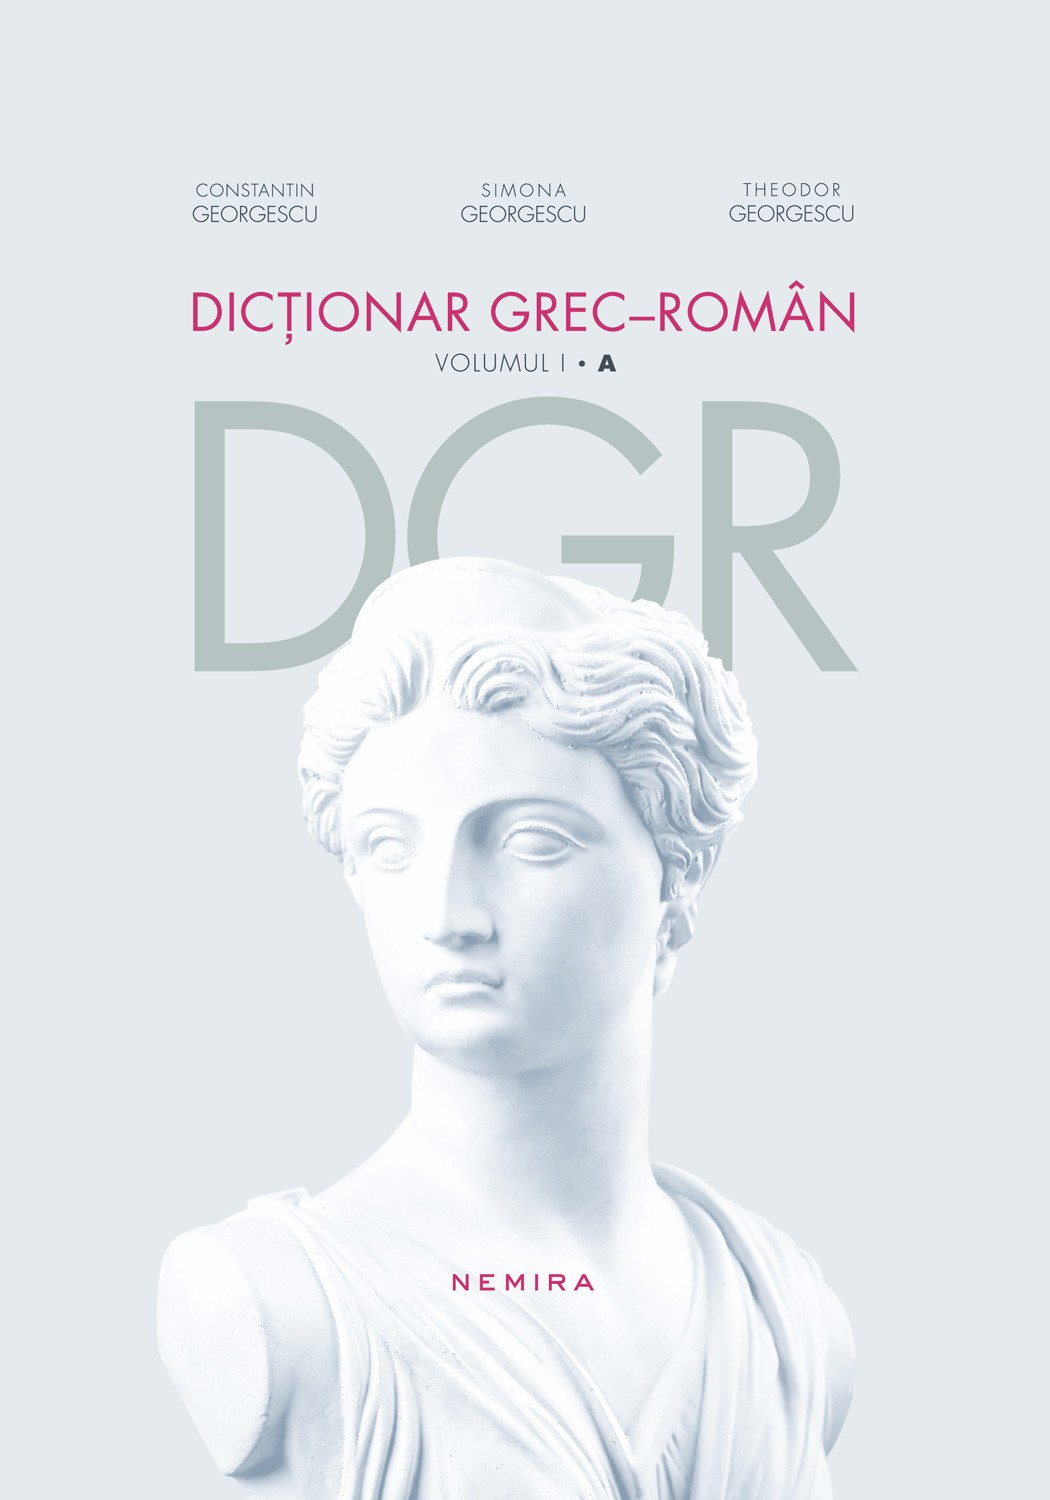 Dictionar grec-roman volumul I - A - Constantin Georgescu, Simona Georgescu, Theodor Georgescu